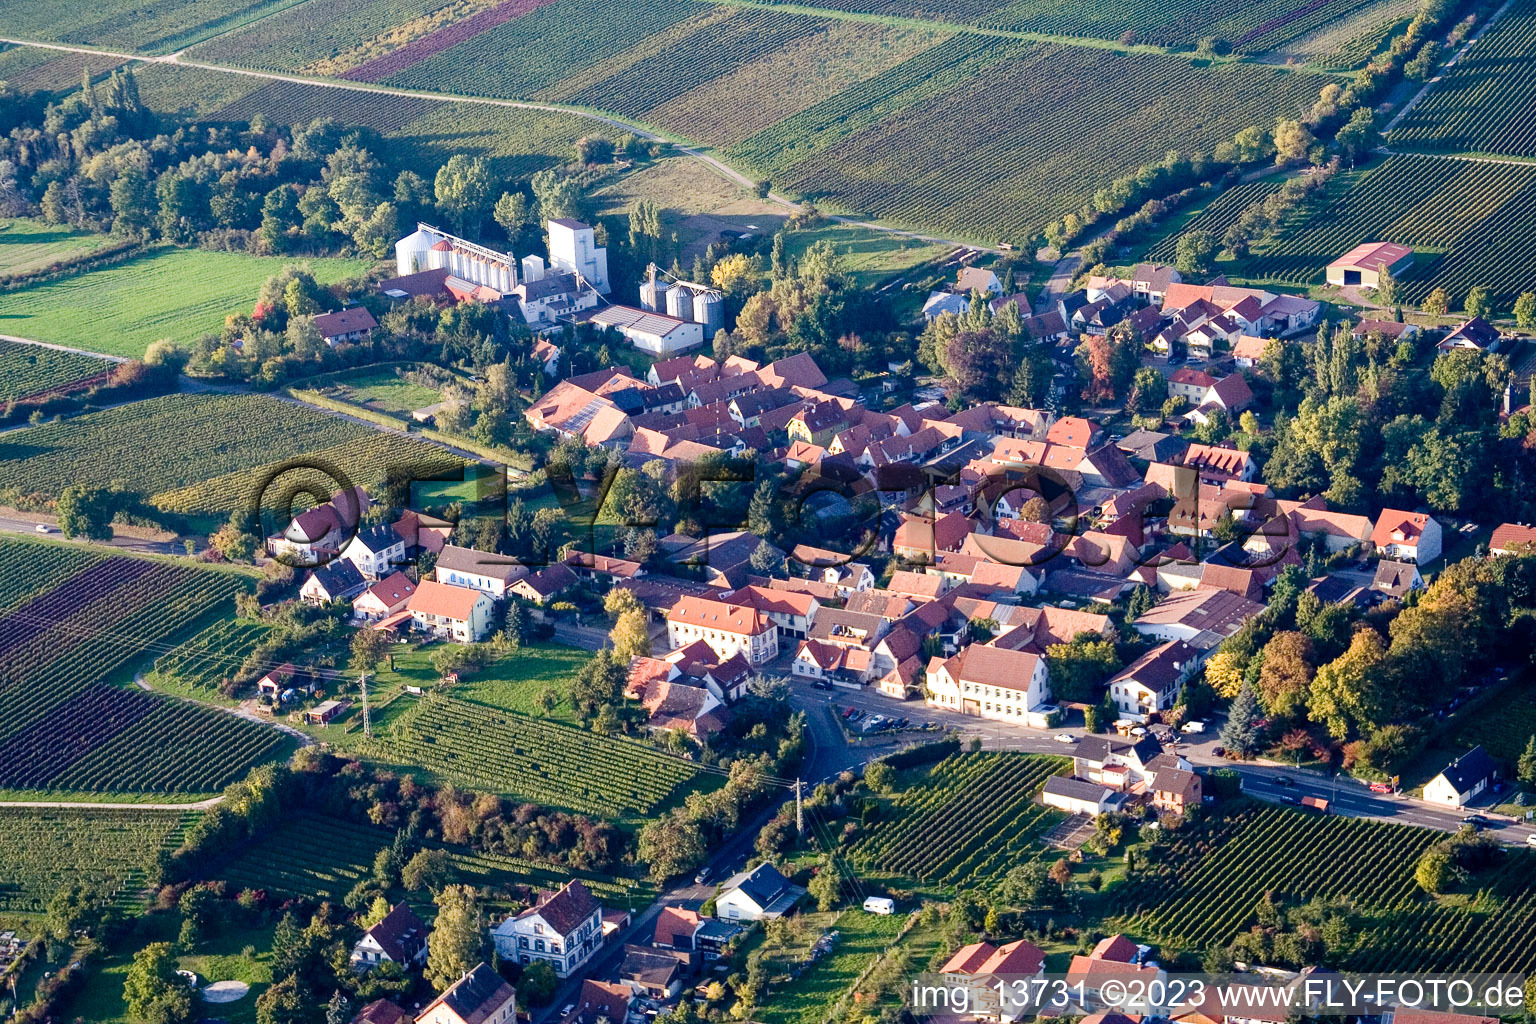 Aerial view of District Appenhofen in Billigheim-Ingenheim in the state Rhineland-Palatinate, Germany